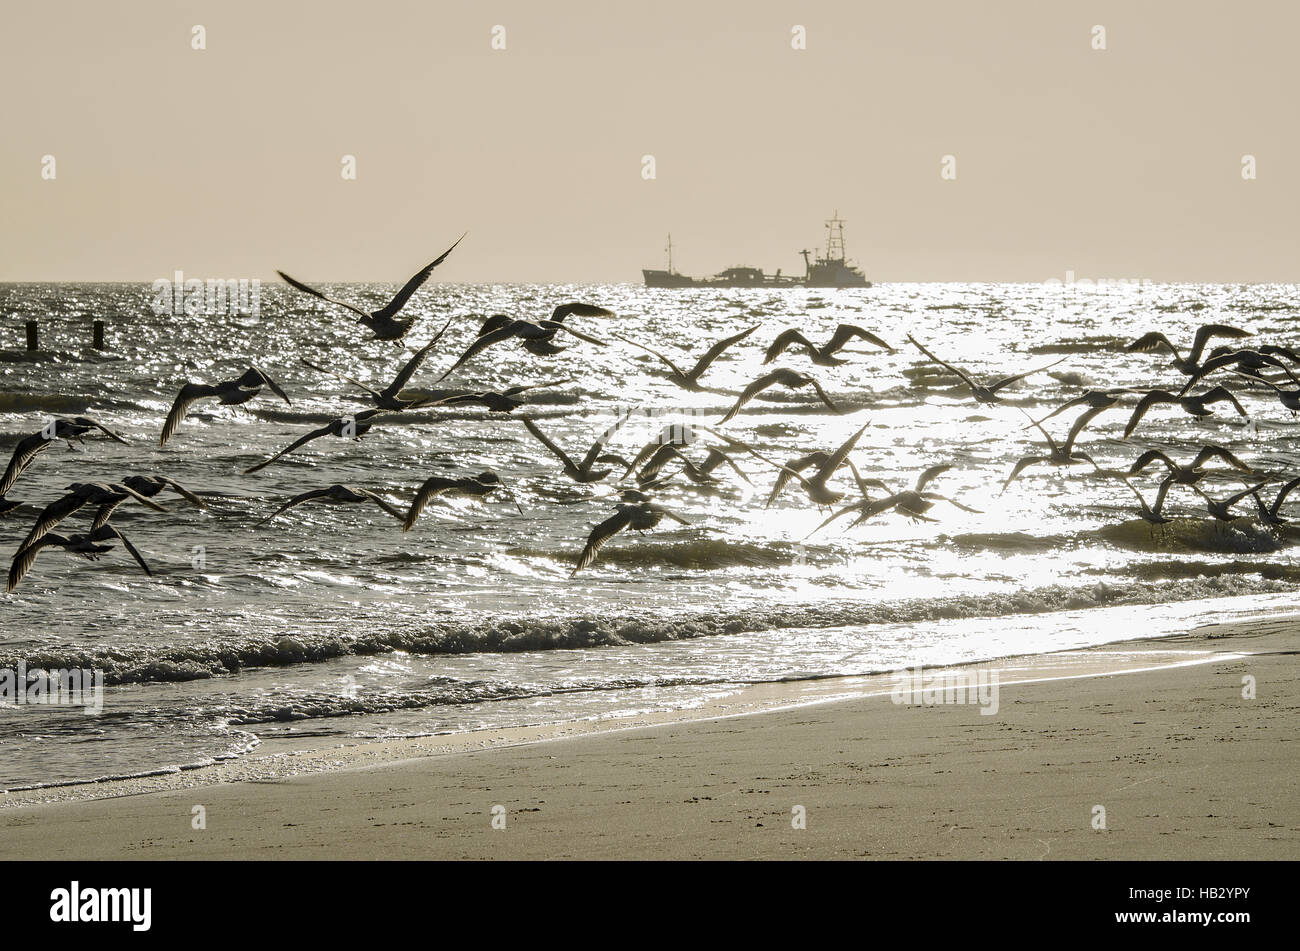 Abstract flock of birds above a beach Stock Photo